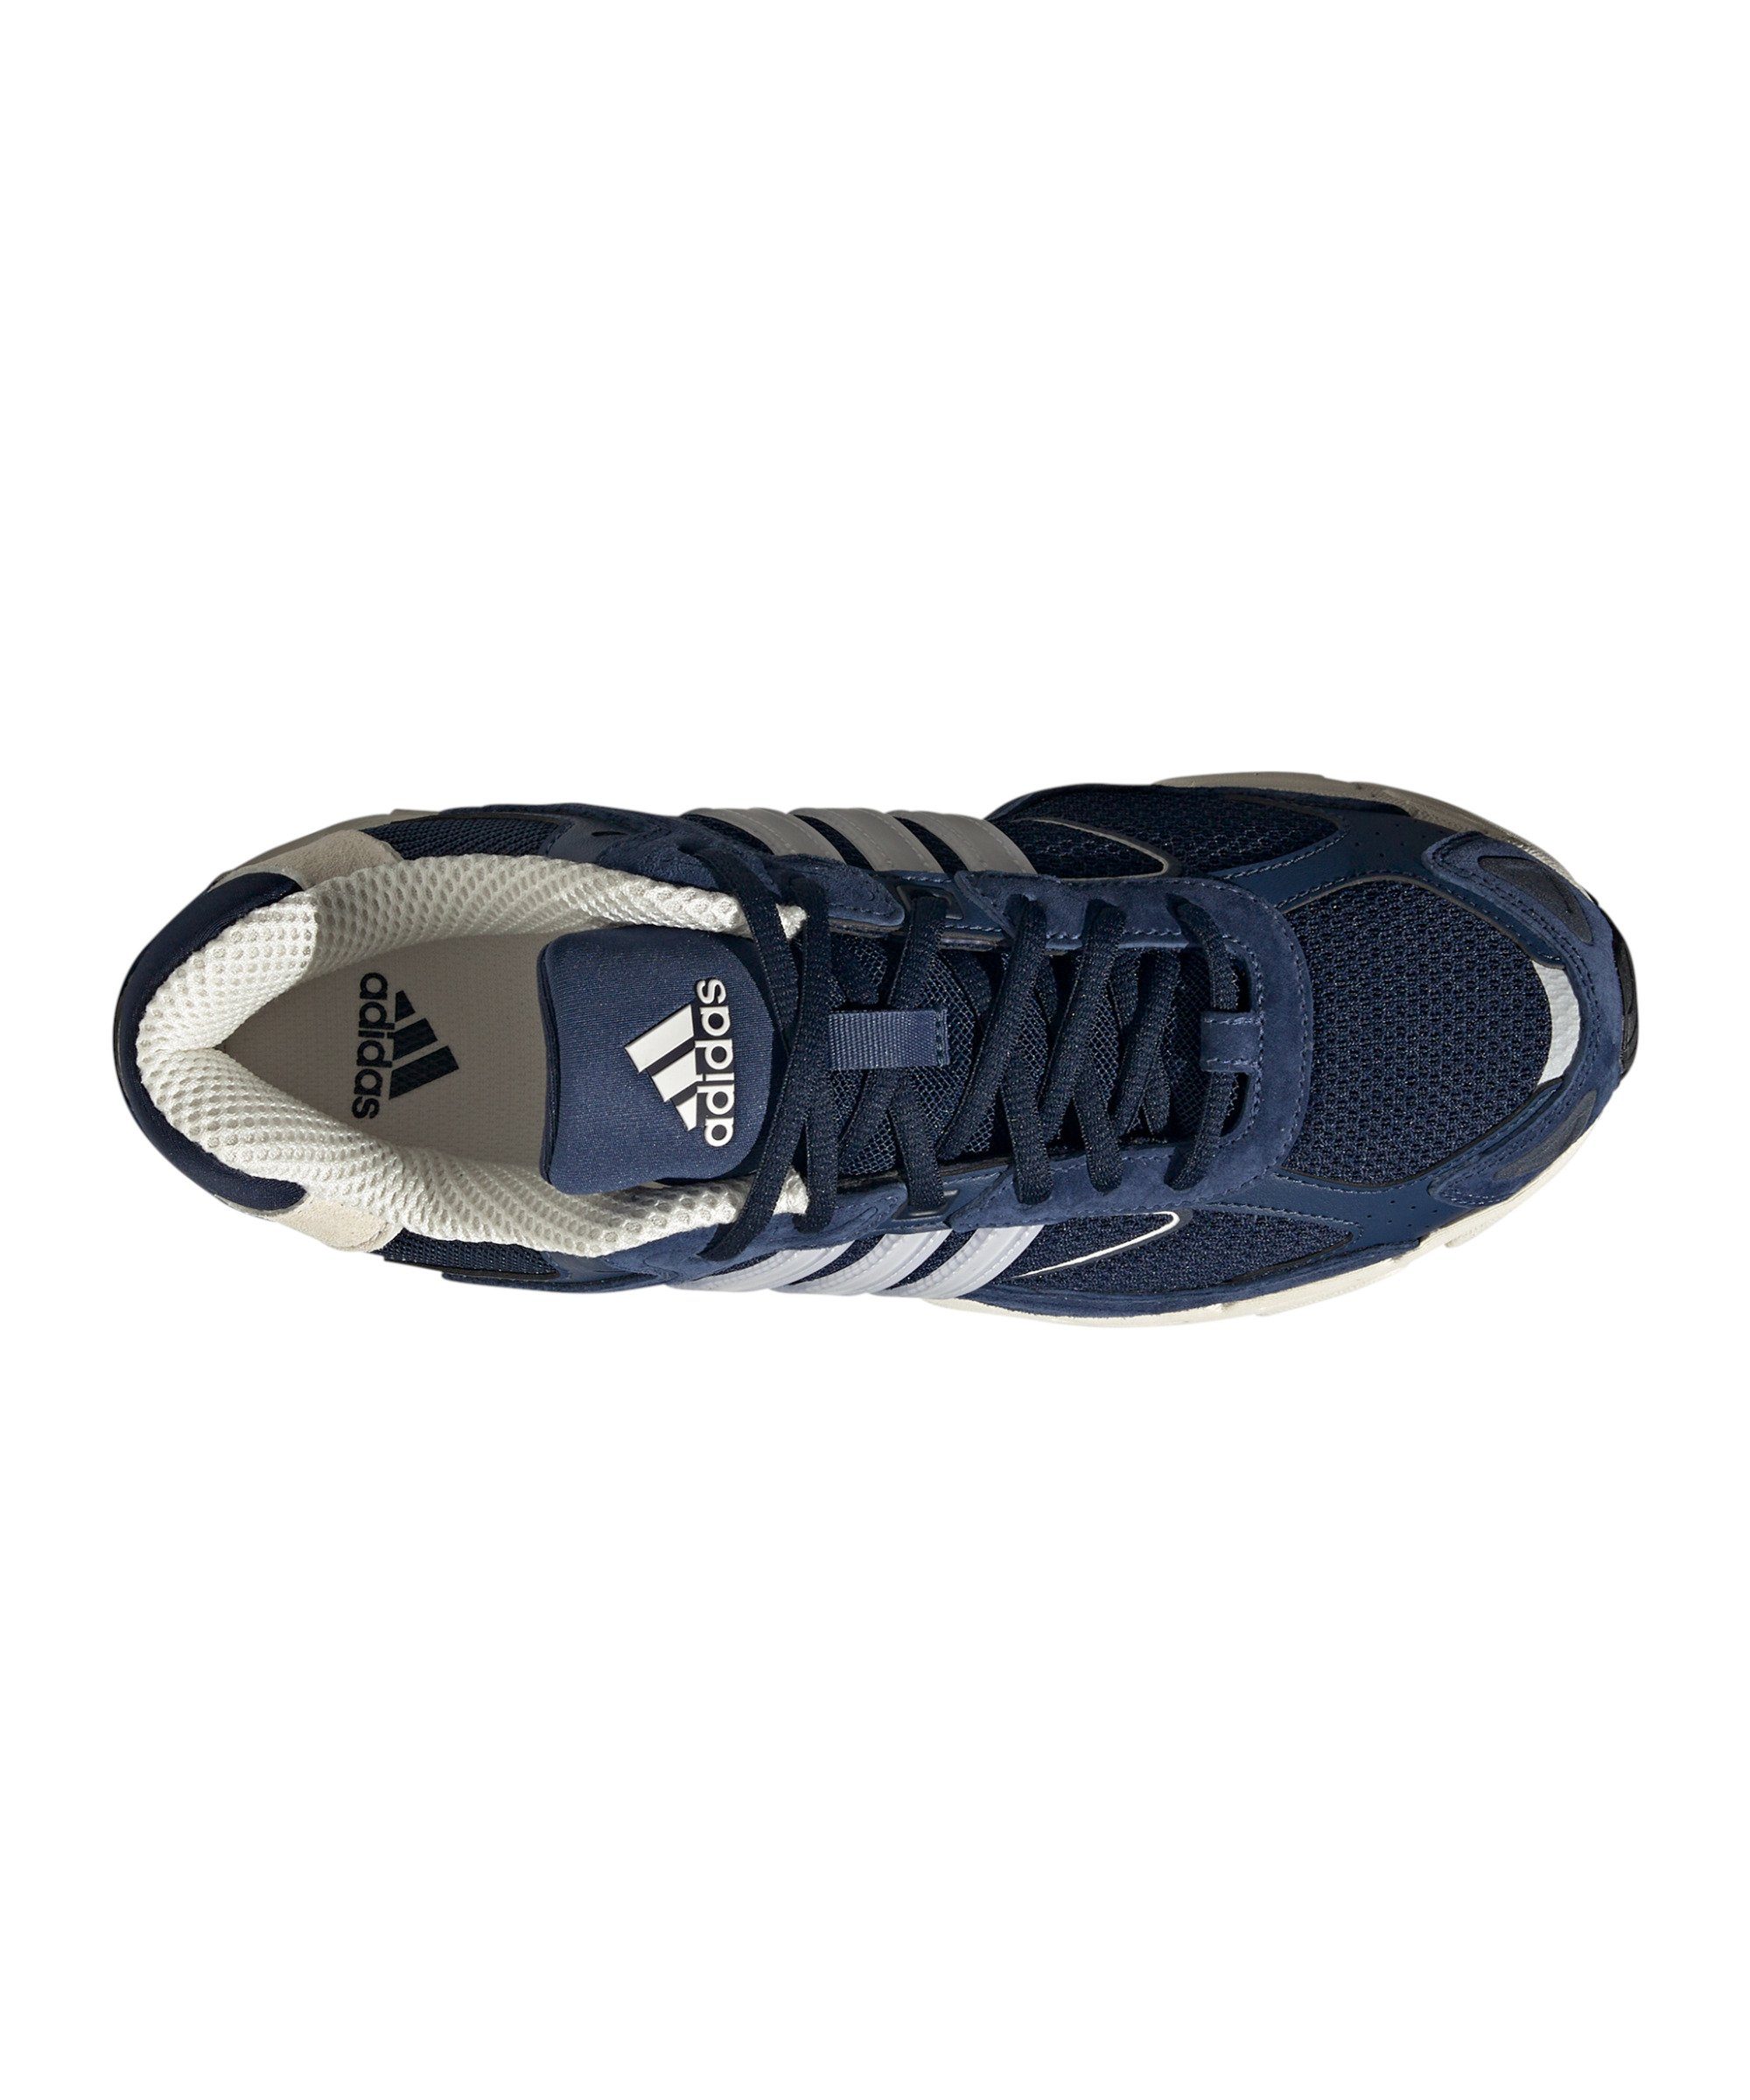 adidas Originals Response CL blaublau Sneaker Beige